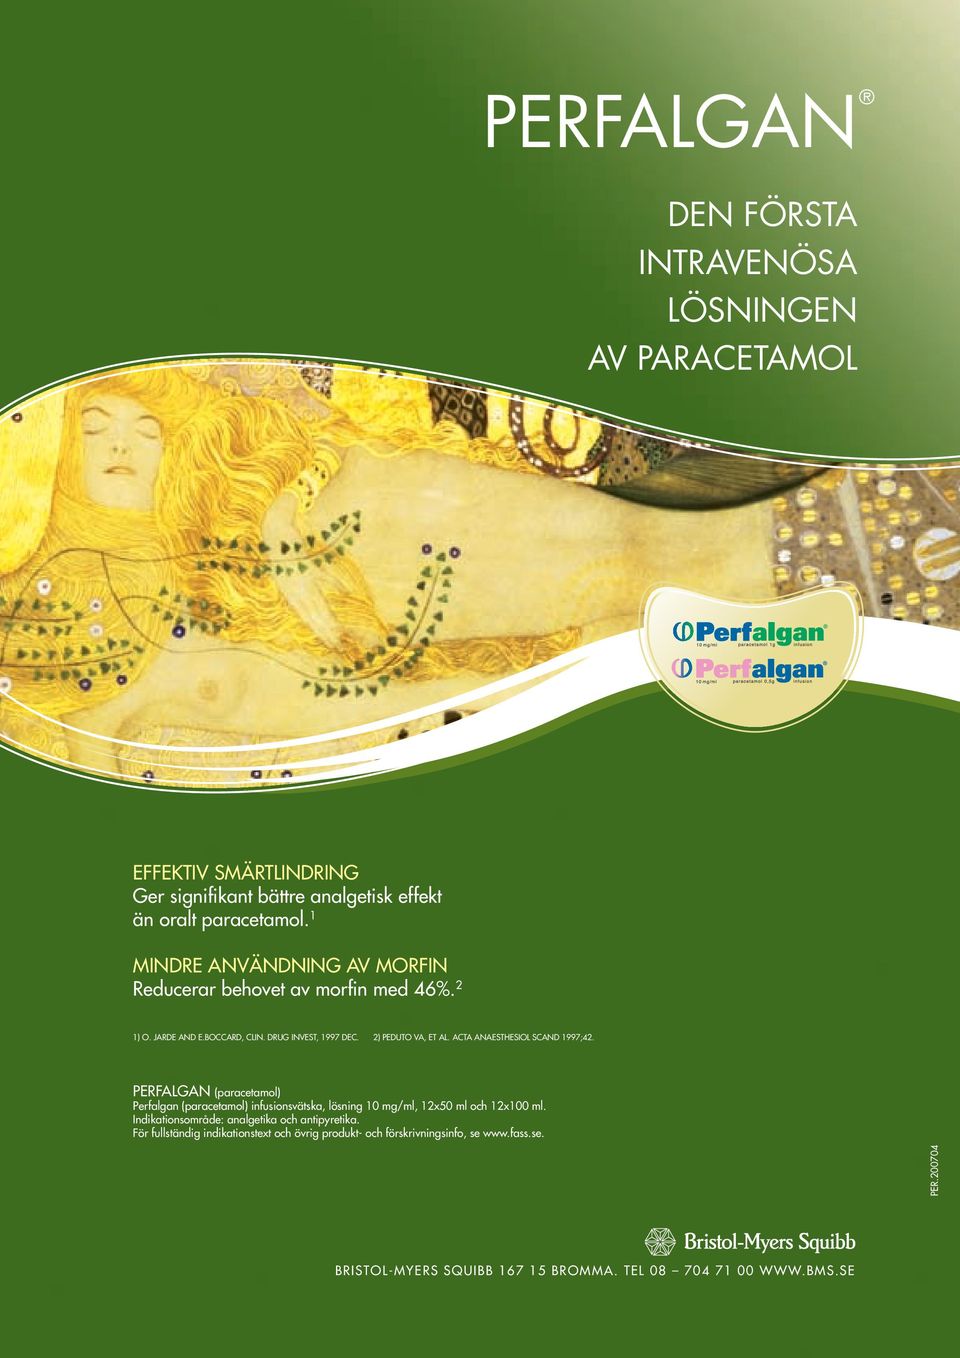 ACTA ANAESTHESIOL SCAND 1997;42. PERFALGAN (paracetamol) Perfalgan (paracetamol) infusionsvätska, lösning 10 mg/ml, 12x50 ml och 12x100 ml.